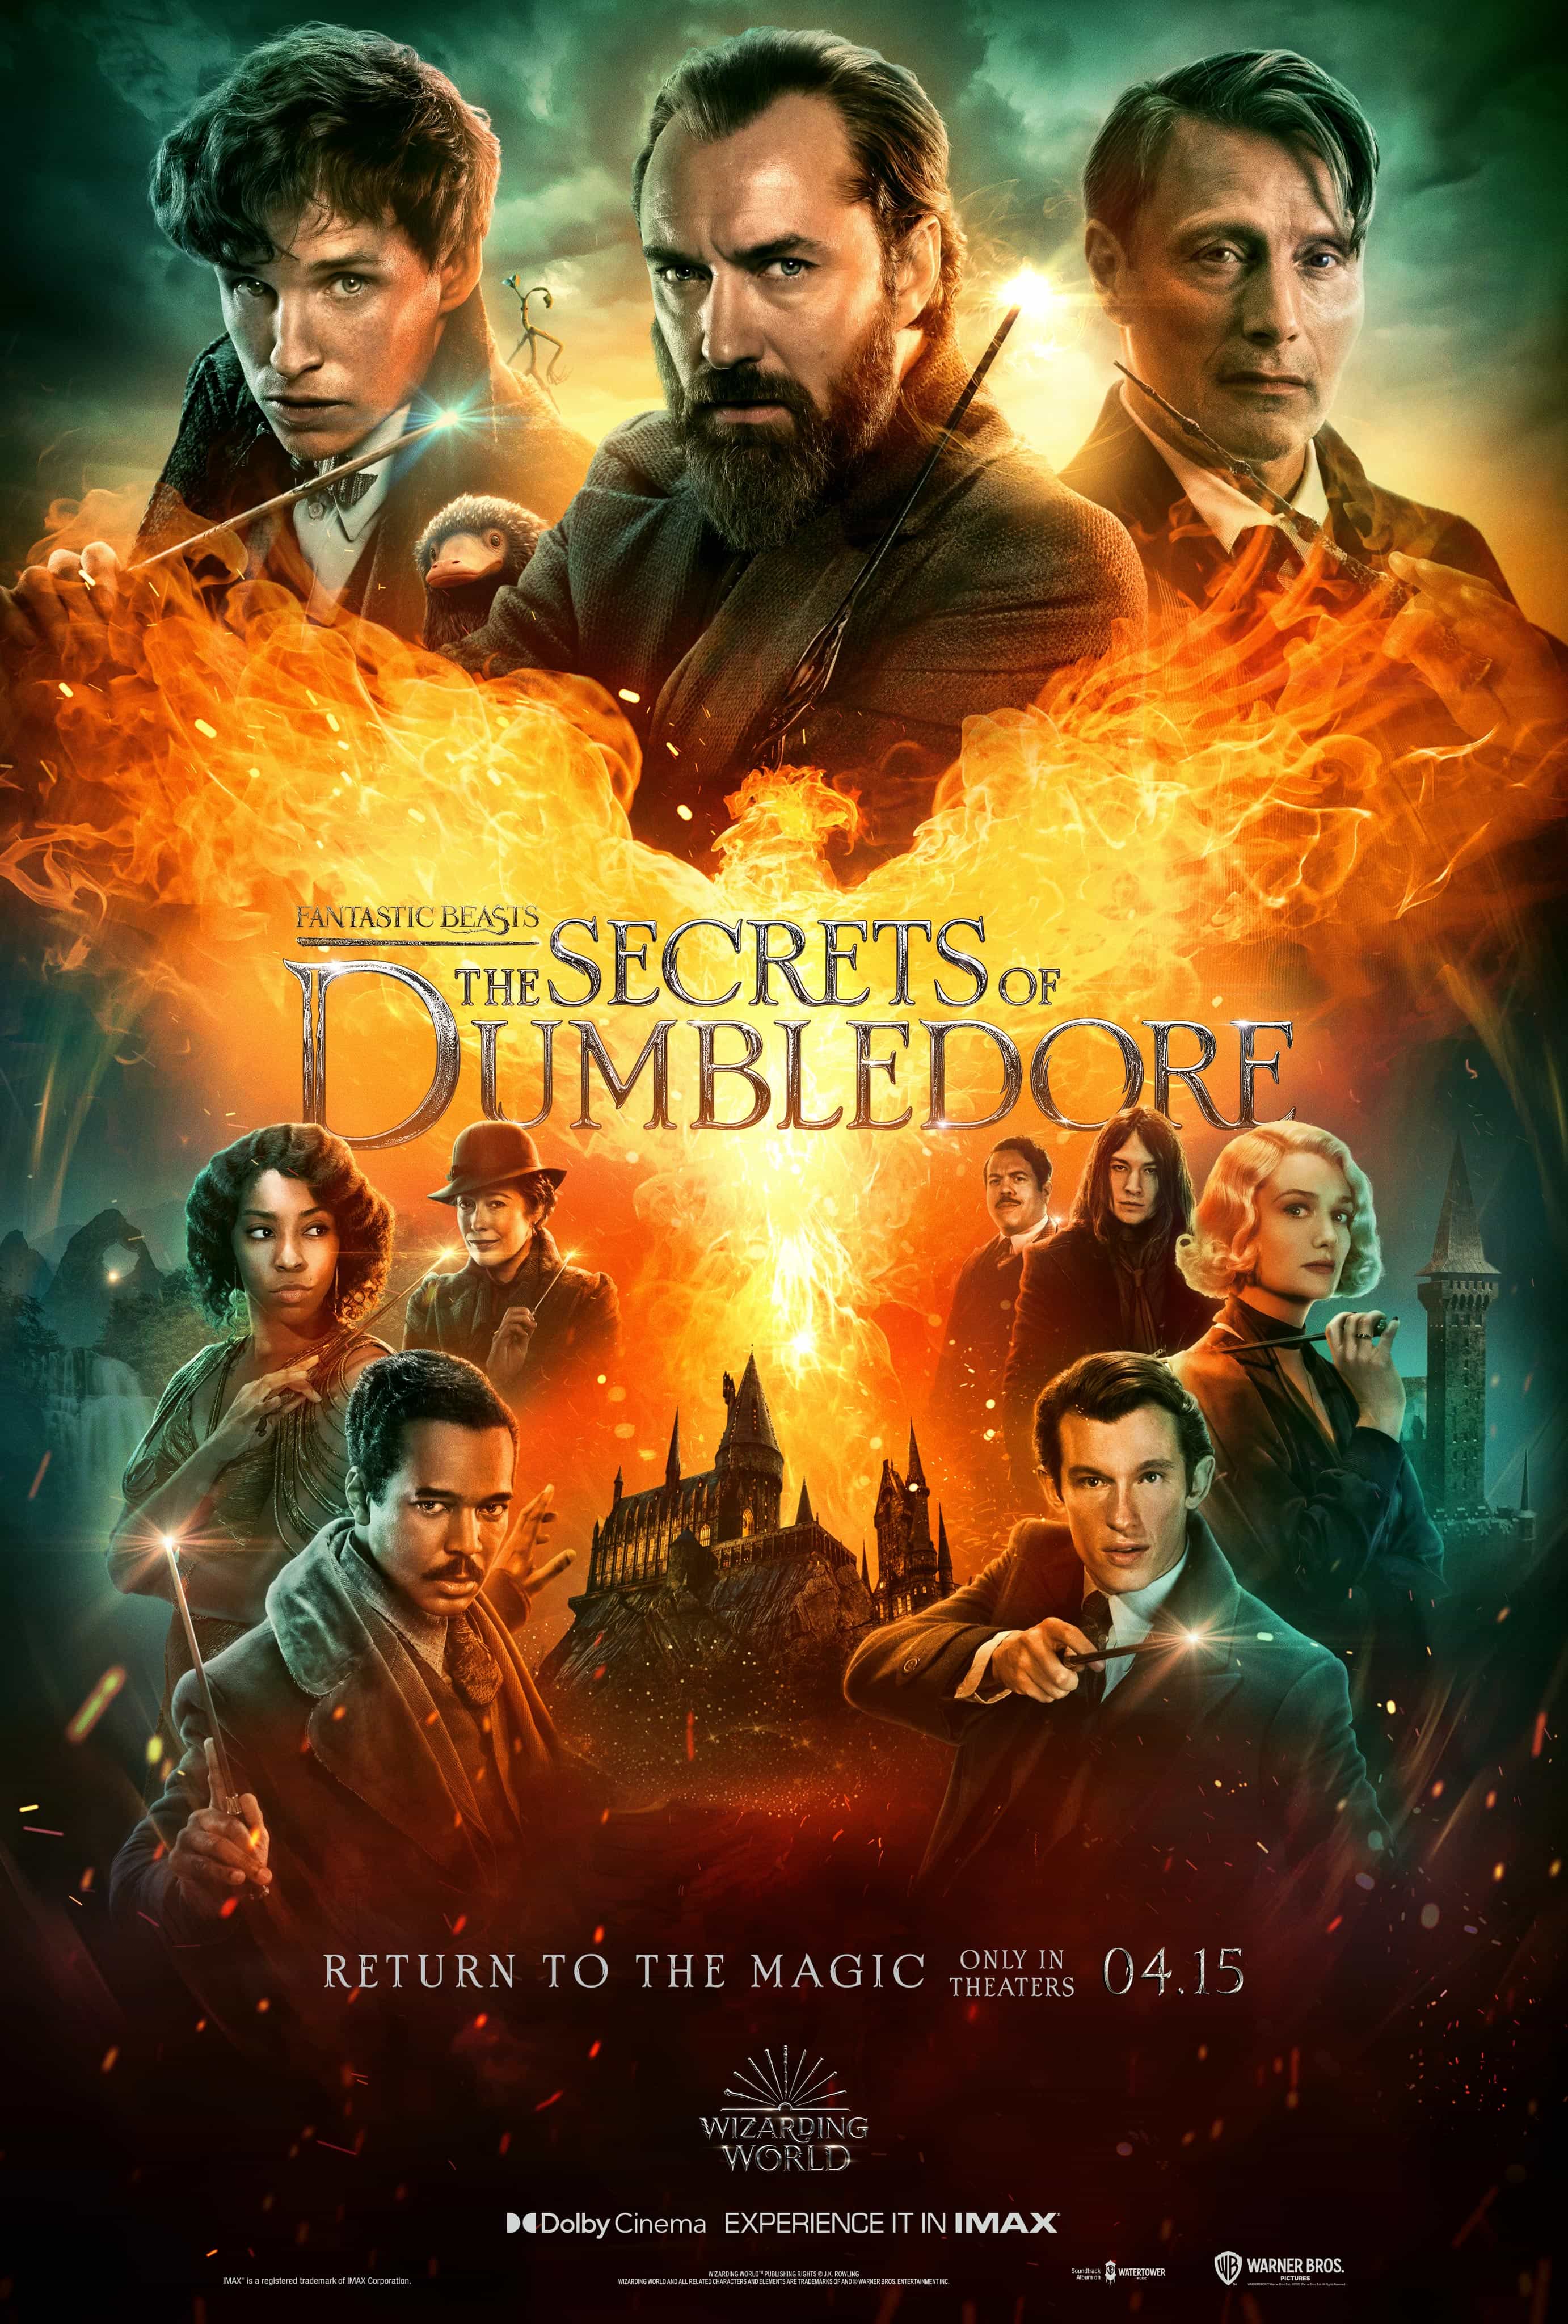 New Fantastic Beasts movie named The Secrets Of Dumbledore